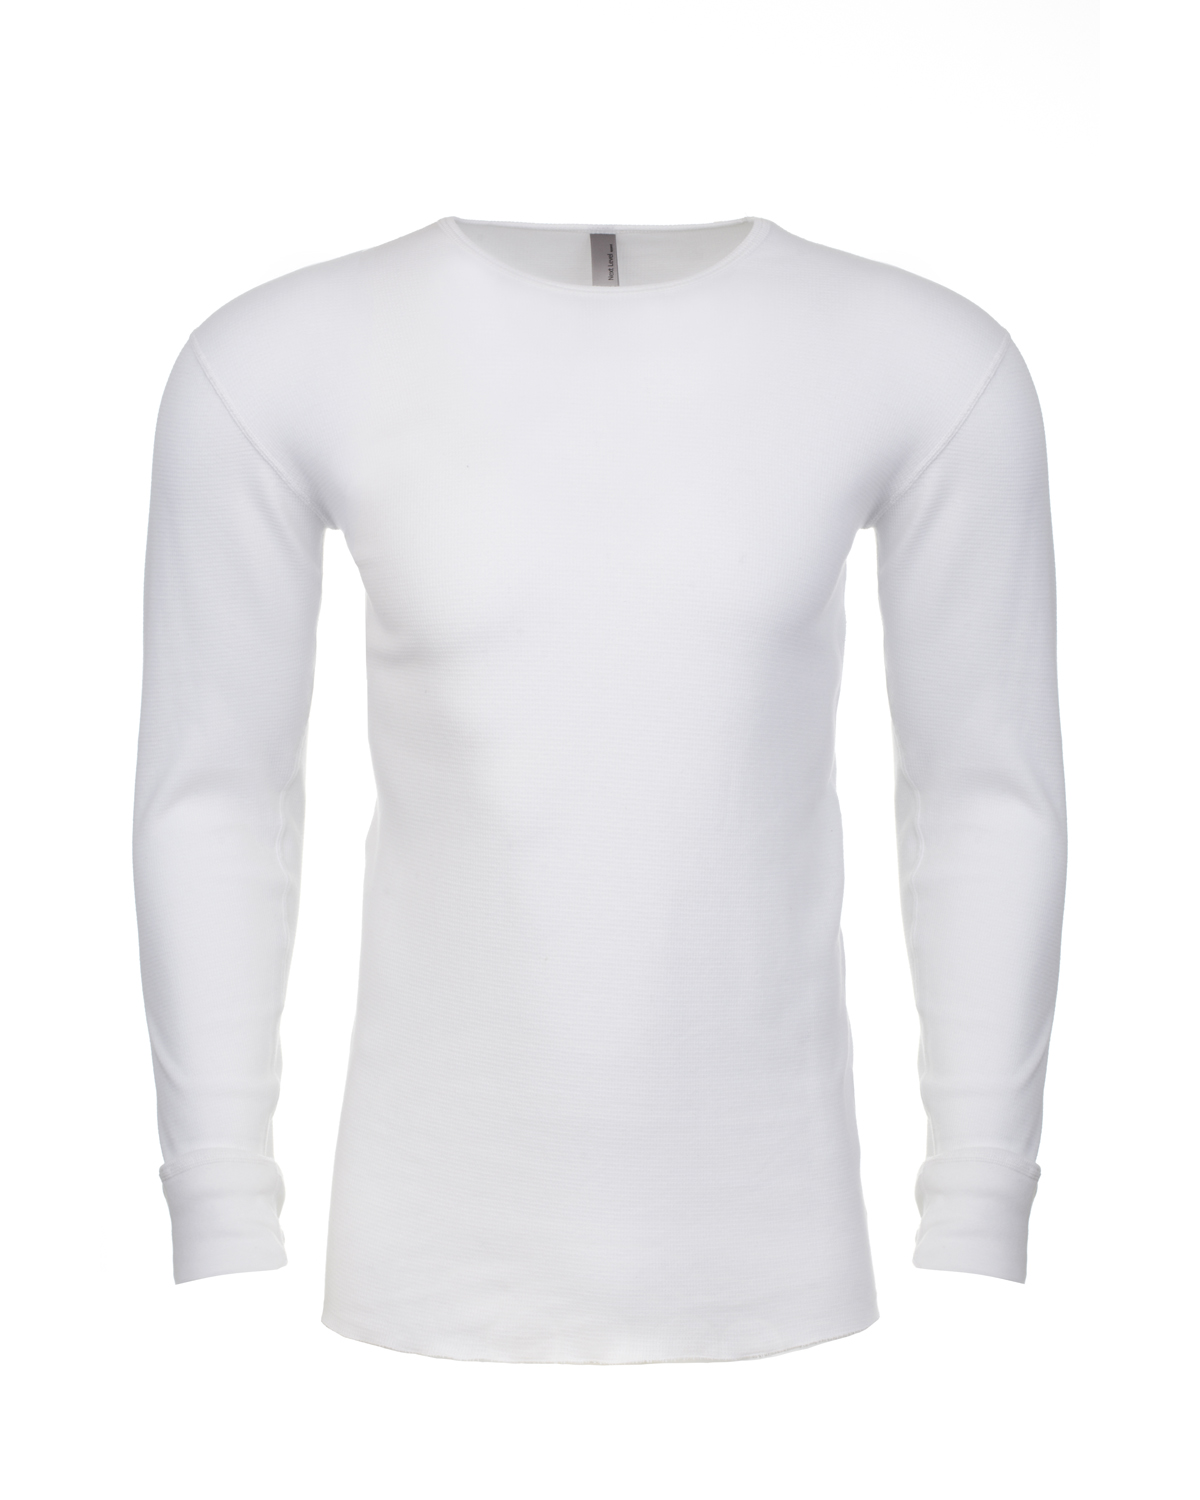 N8201 Next Level Womens Long-Sleeve Thermal T-Shirt